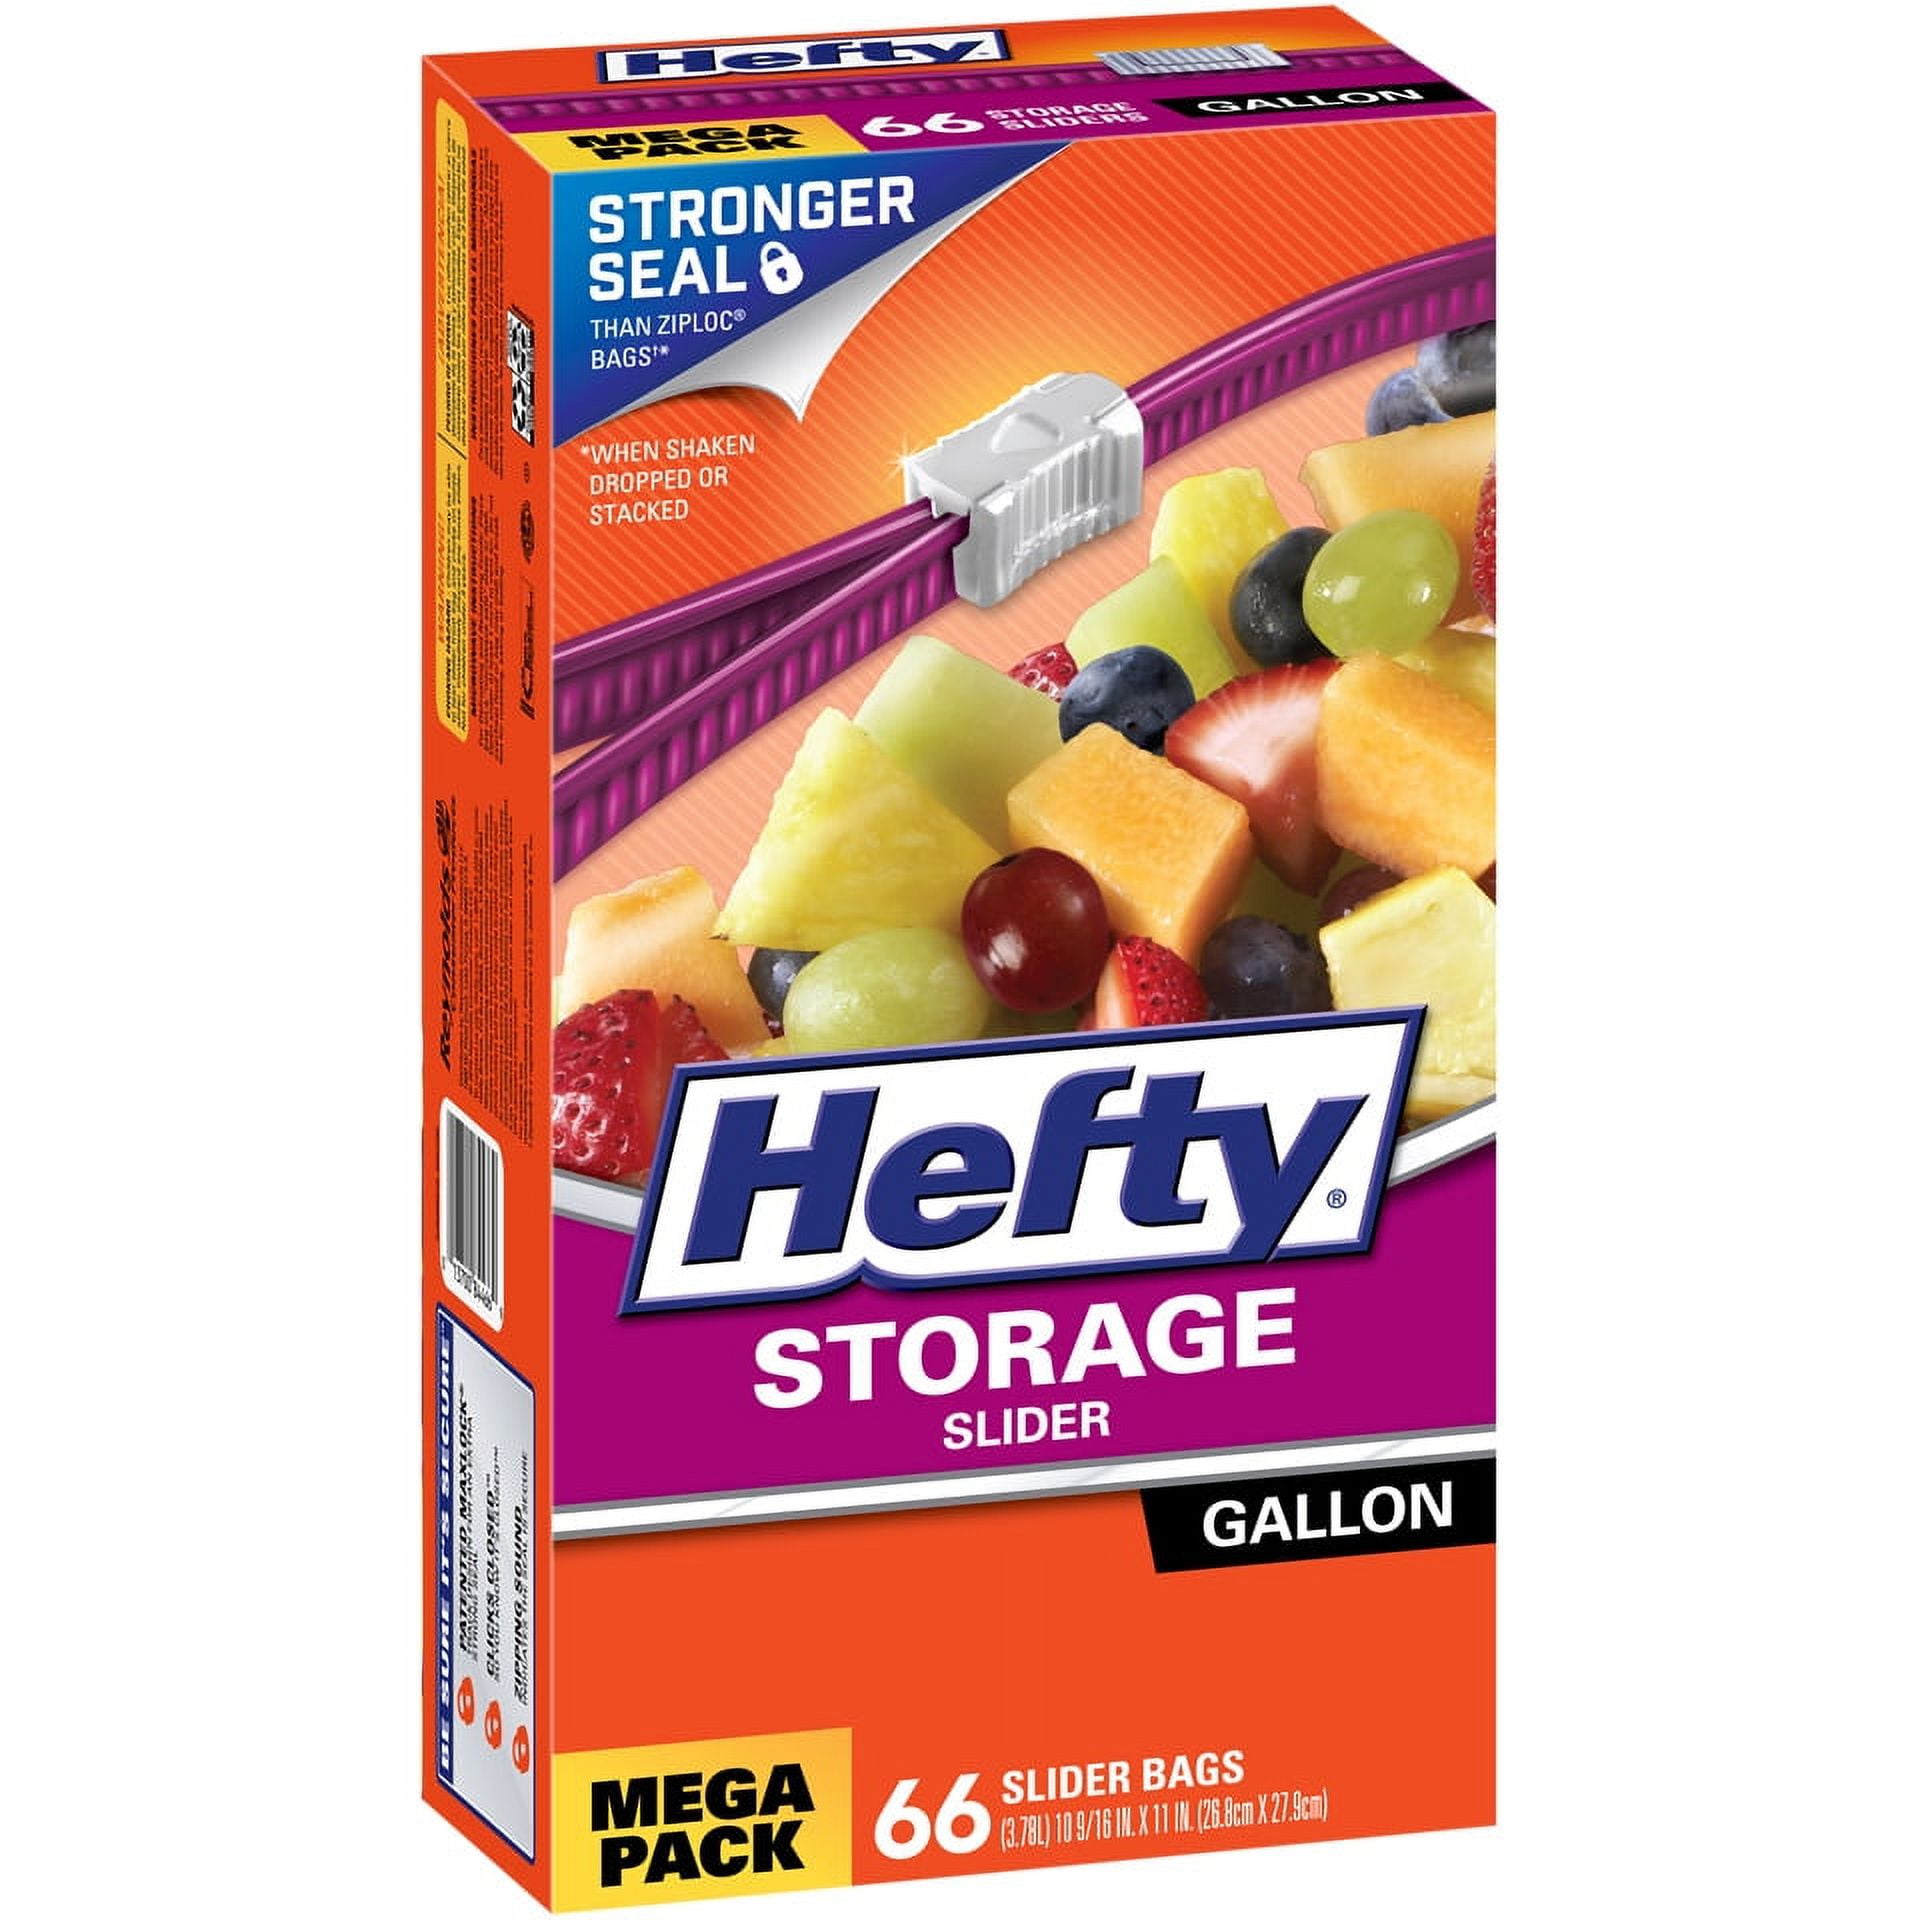  Hefty Slider Storage Bags, Gallon Size, 66 Count : Home &  Kitchen